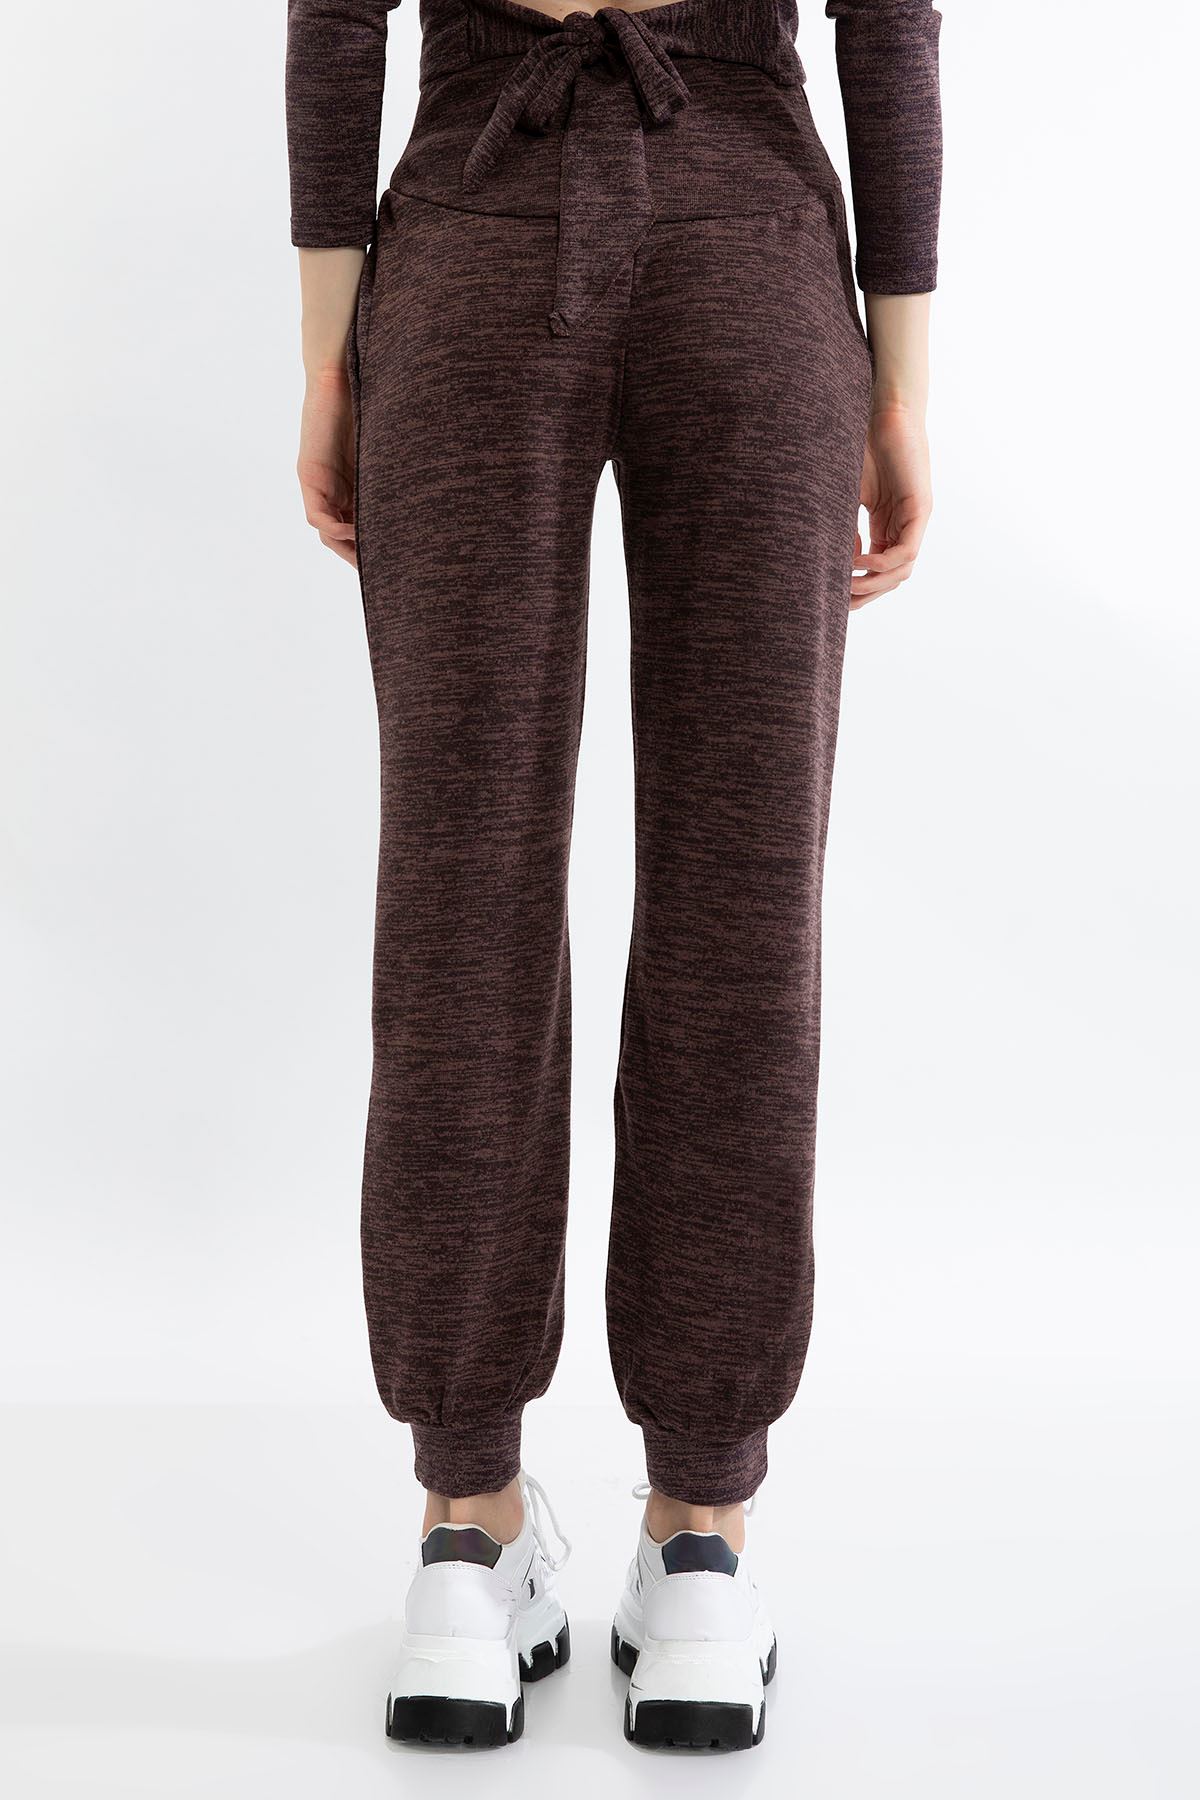 Melange Fabric Long Comfy Fit Gray Women'S Trouser - Brick 